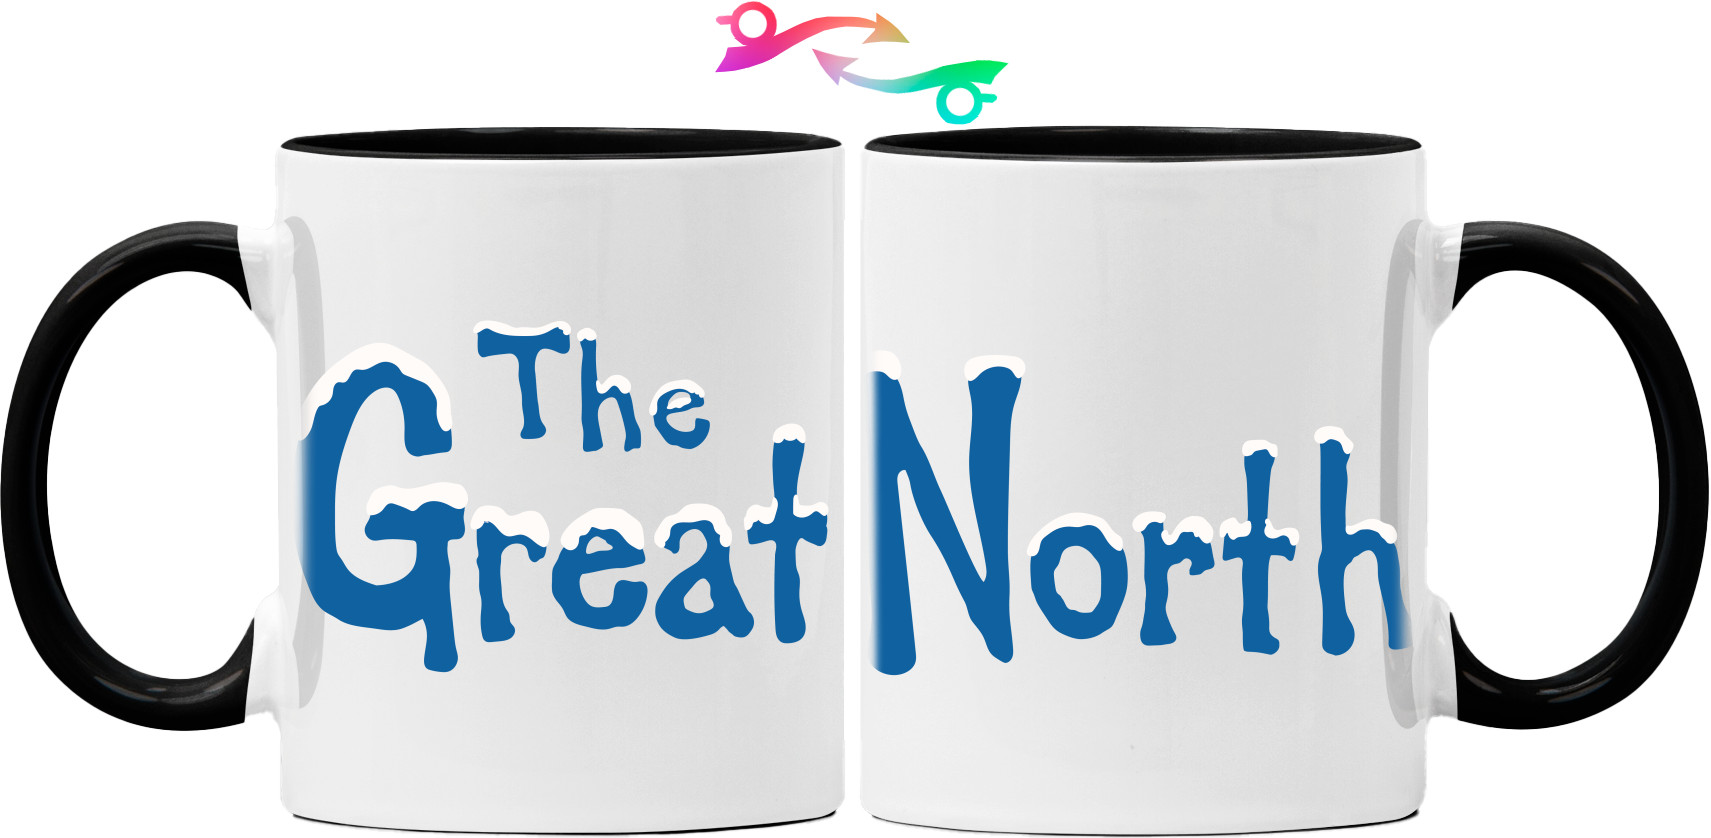 The Great North лого